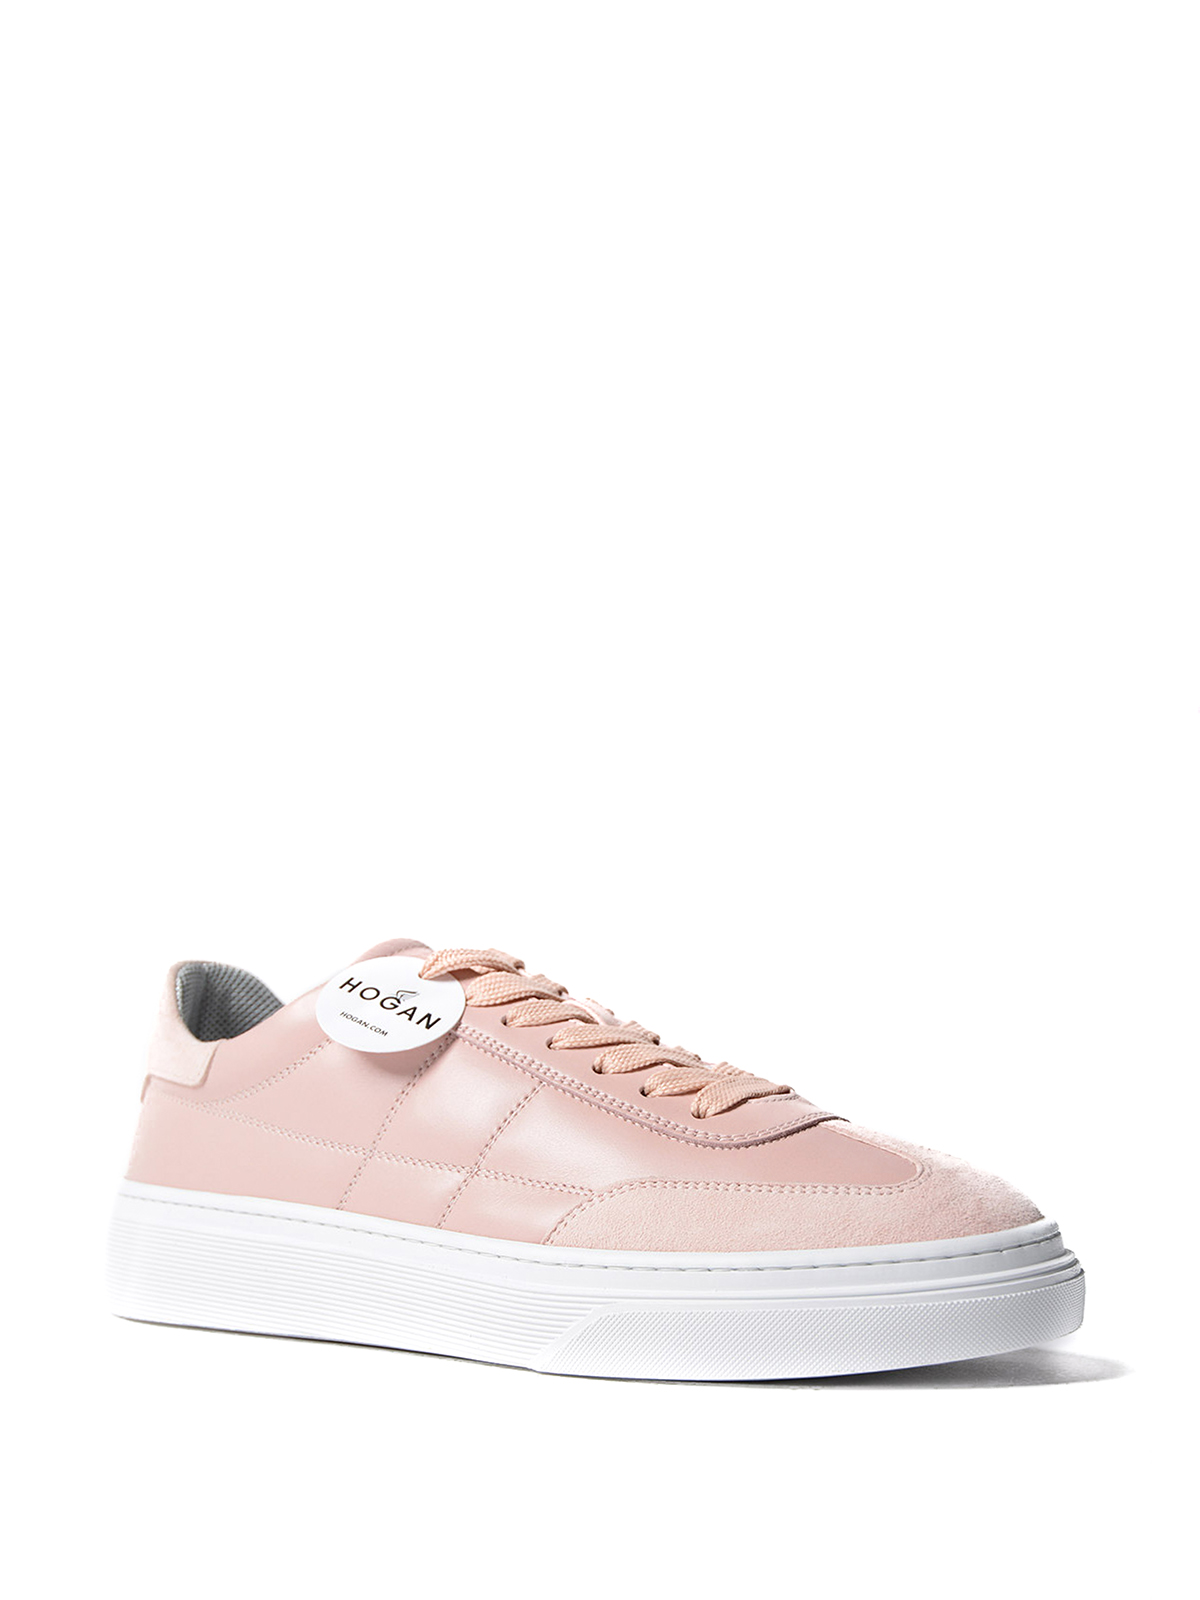 hogan sneakers rosa